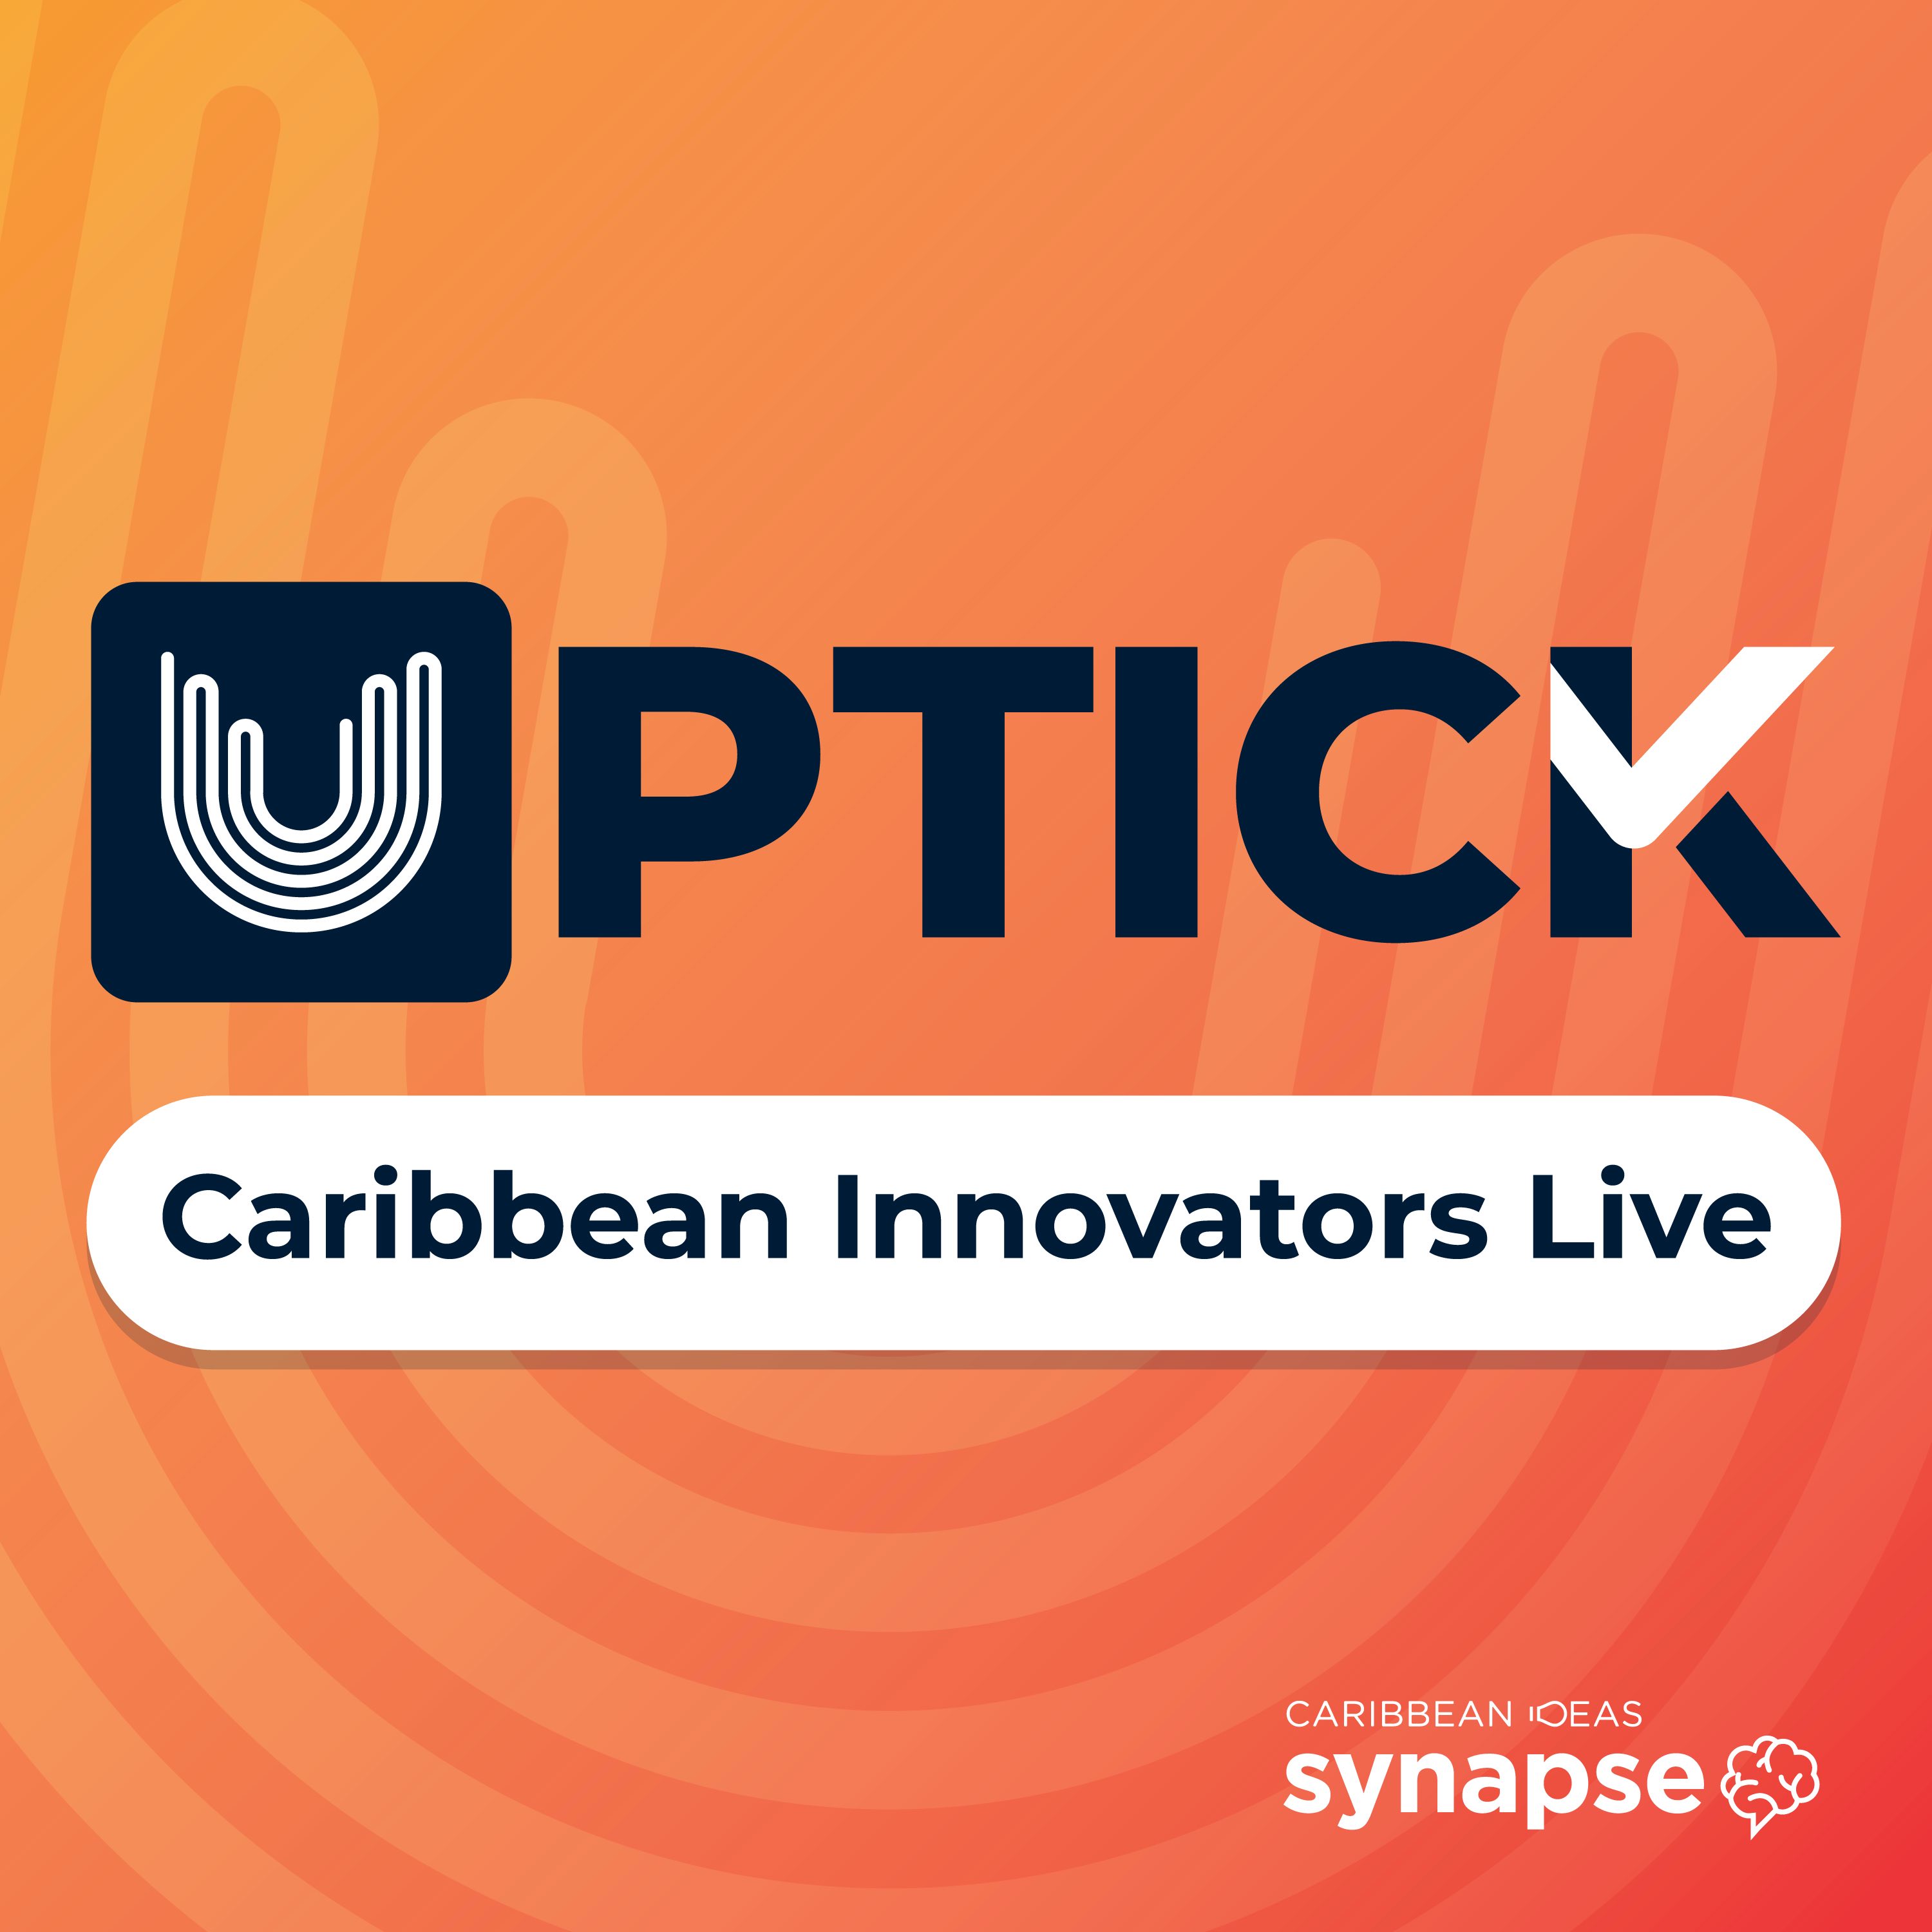 Artwork for podcast UpTick - Caribbean Innovators Live